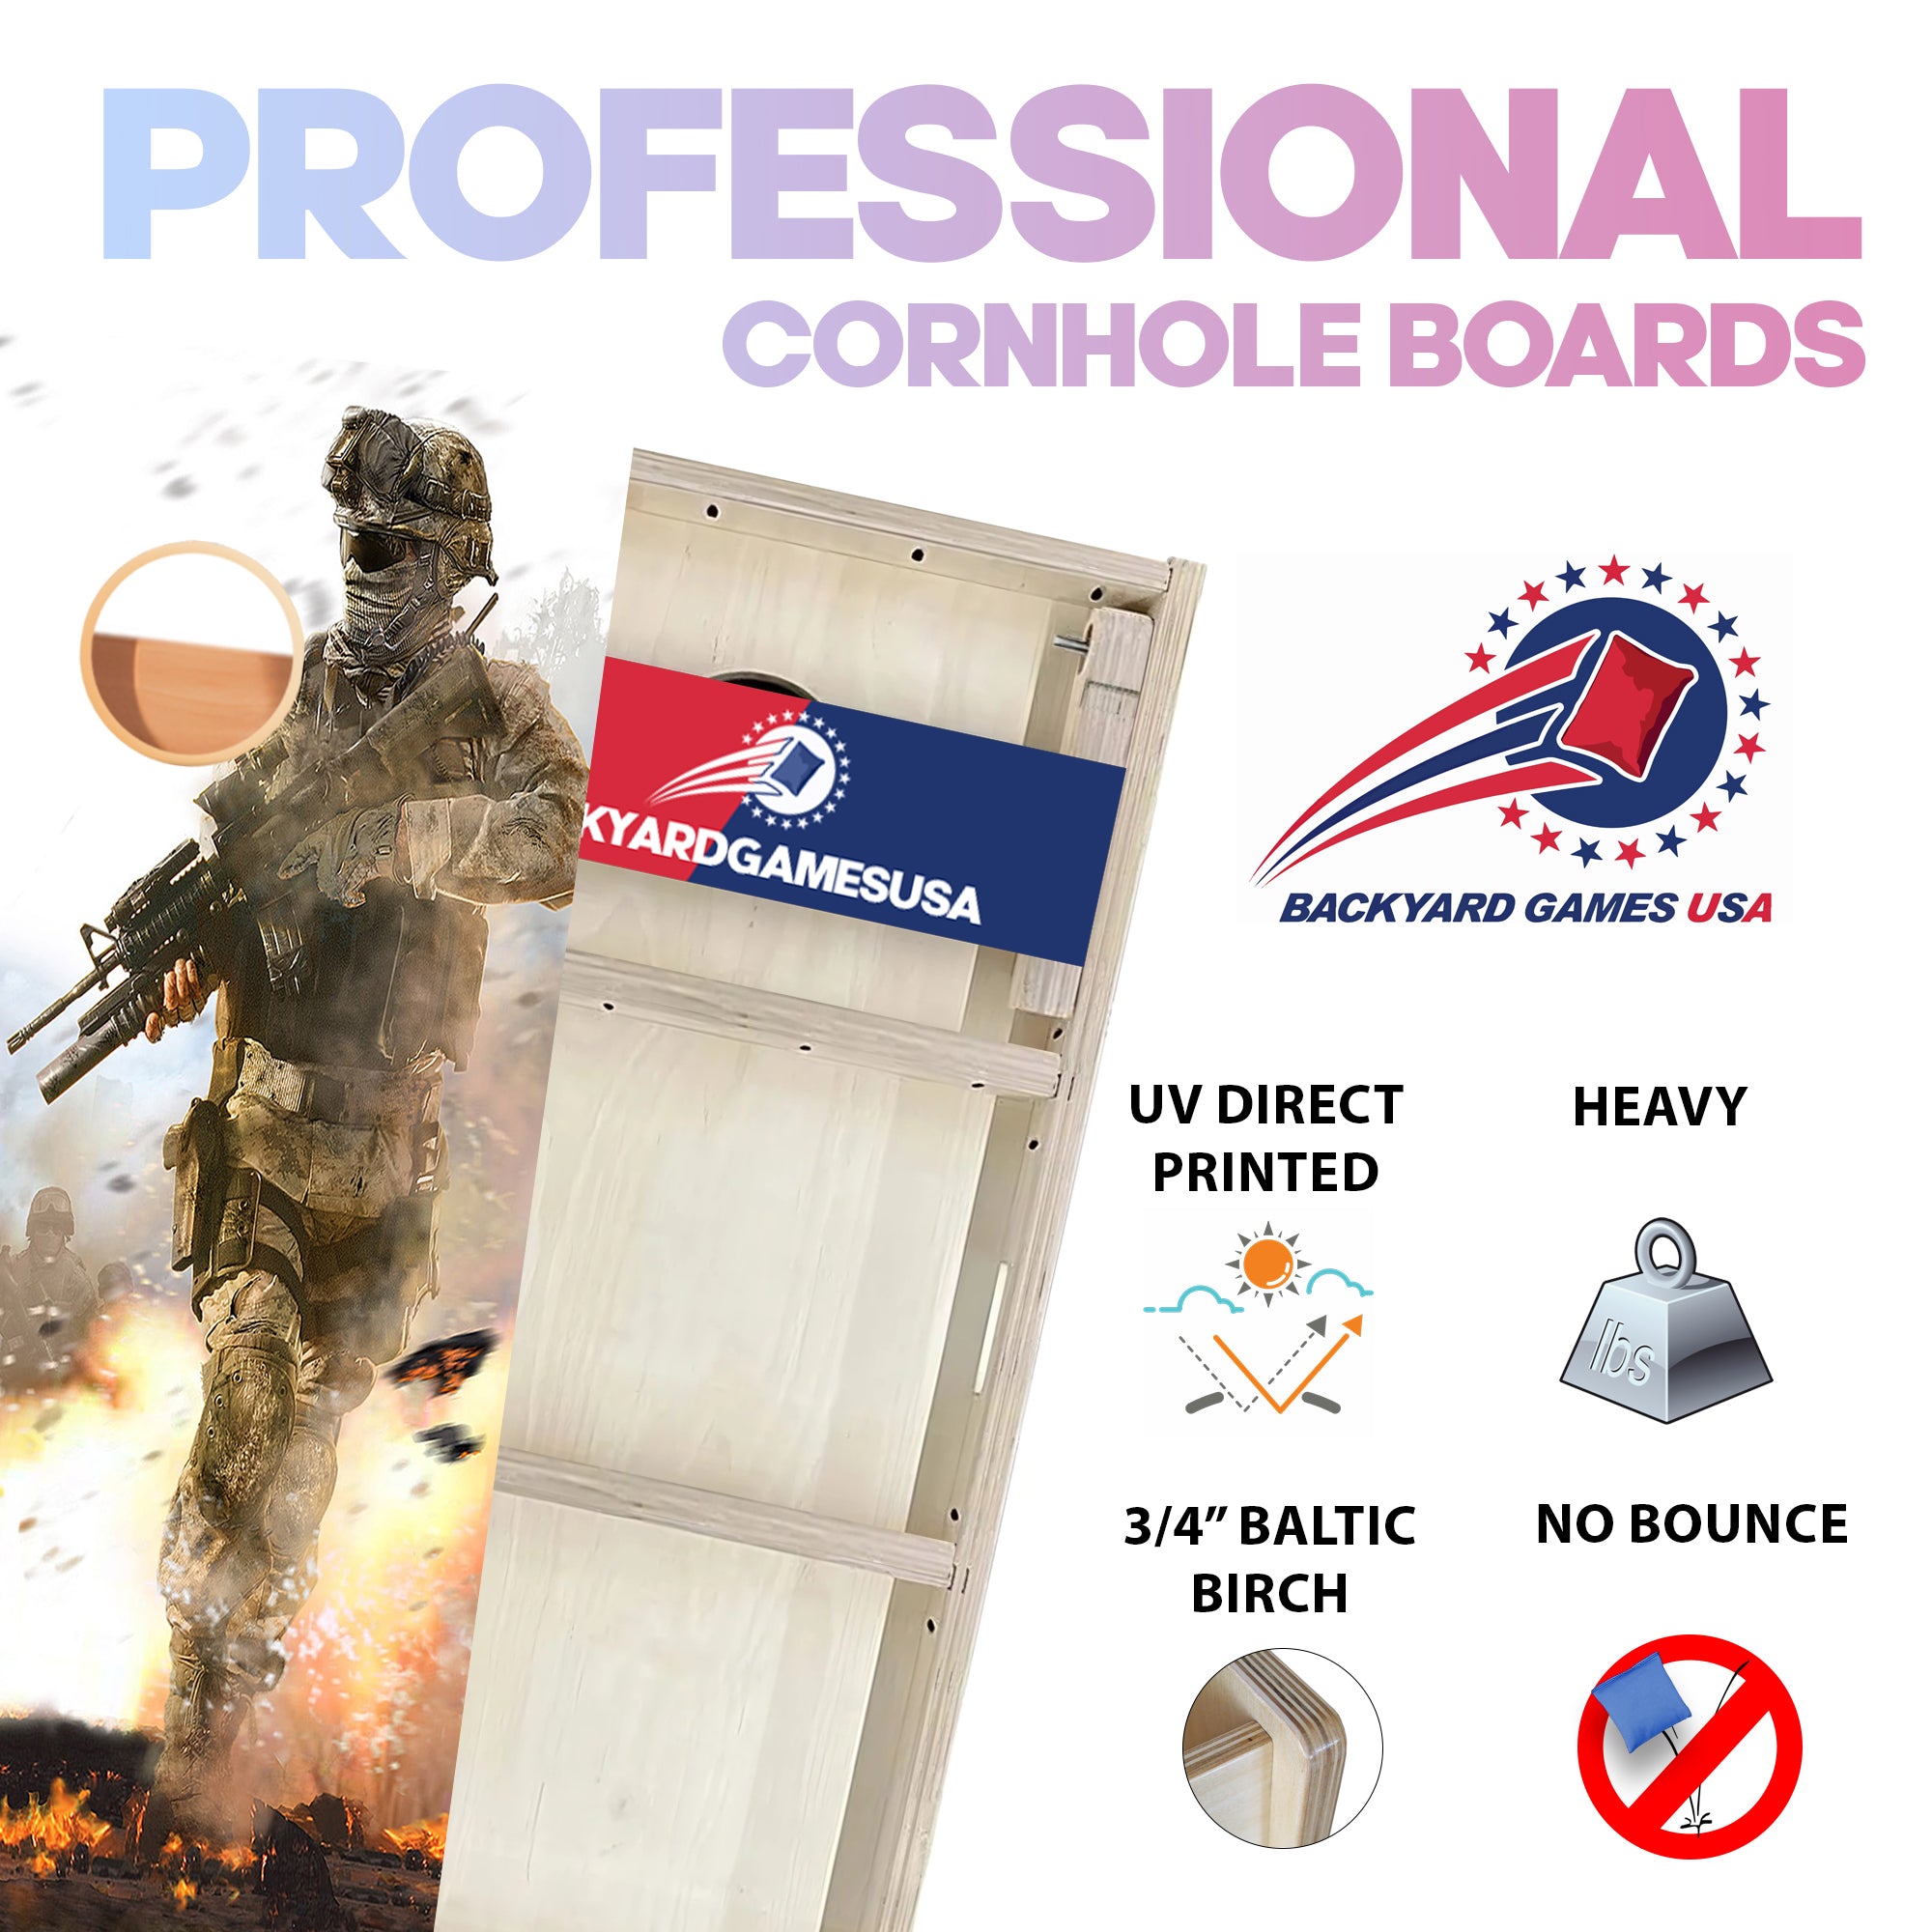 Soldier Battle Professional Cornhole Boards